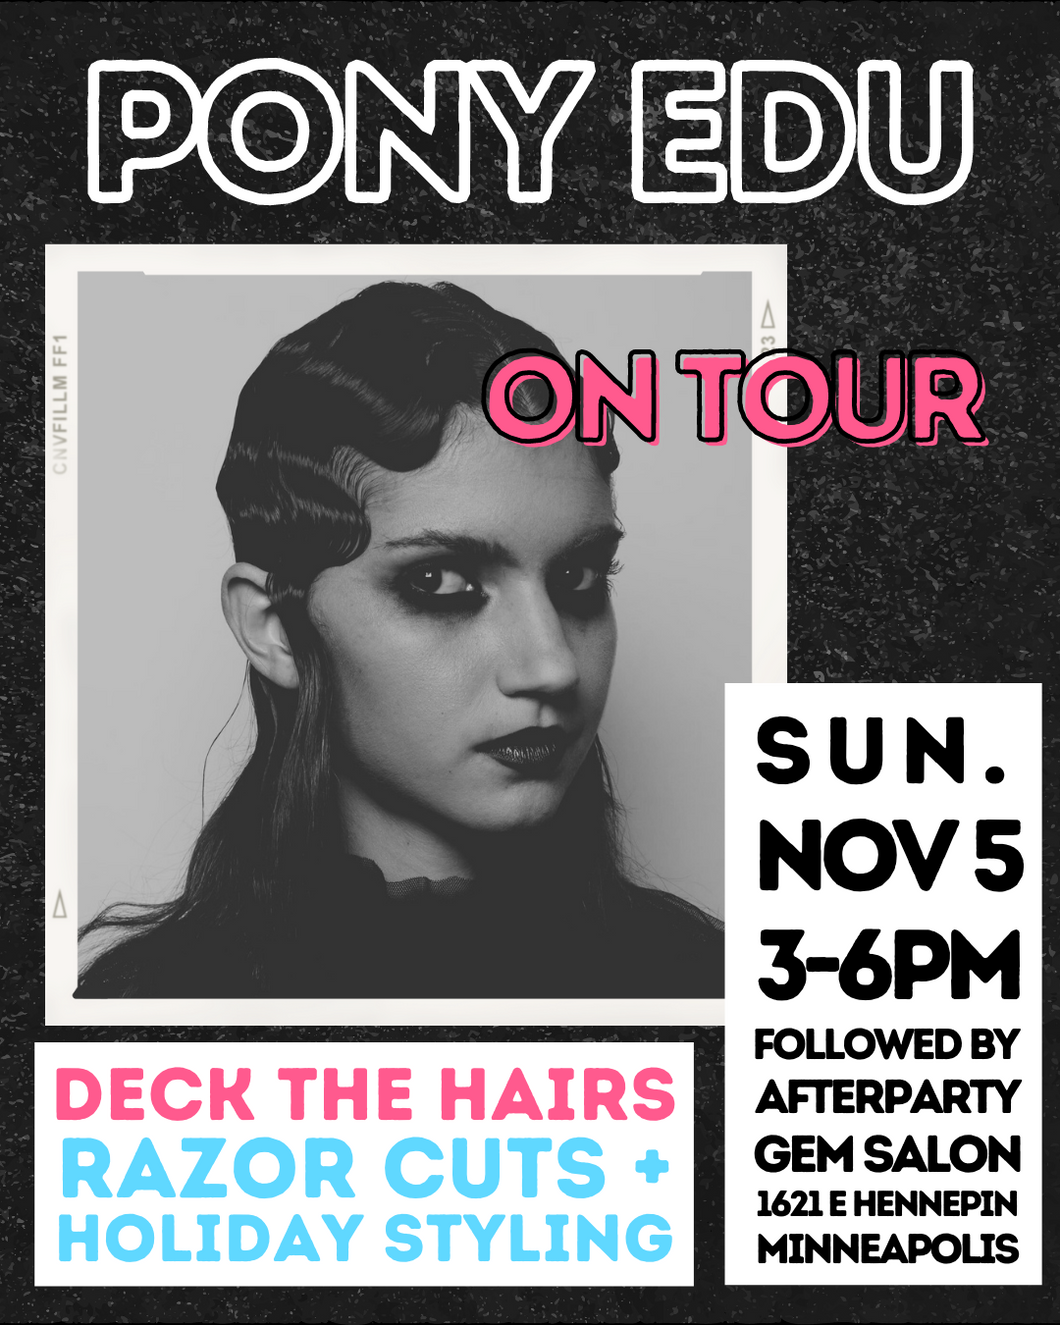 Pony Edu - Corinna + Friends On Tour - November 5 at Gem Salon in Minneapolis